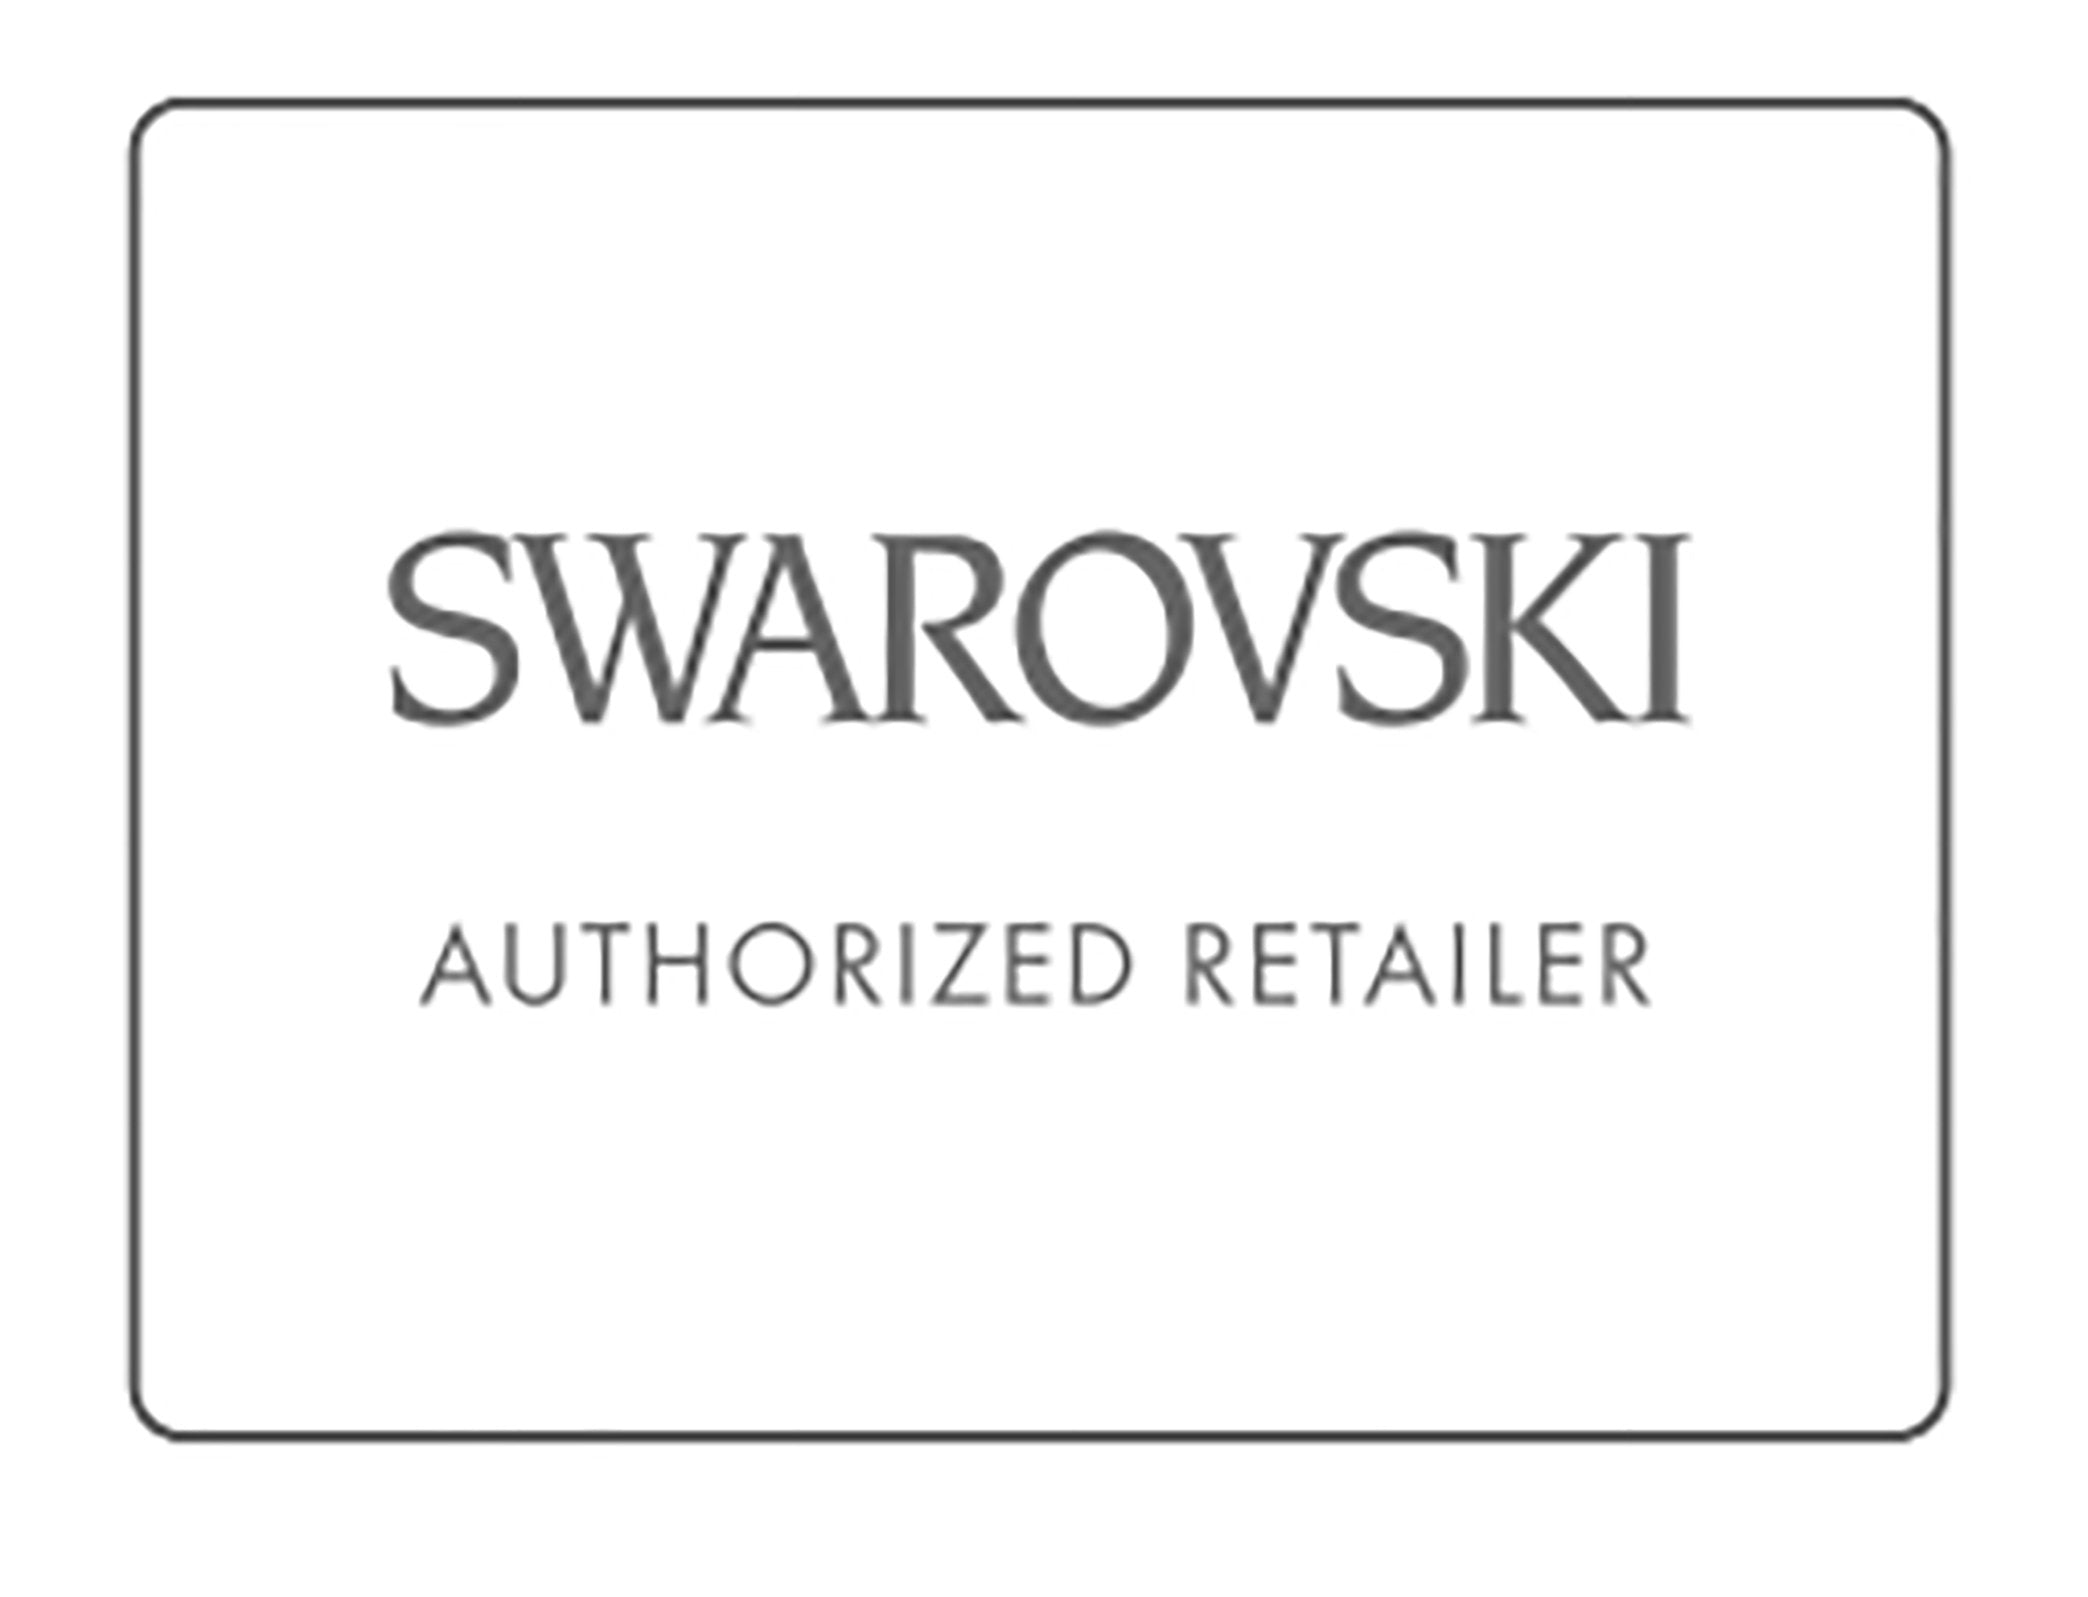 1pc, 18x11.5mm, Genuine Swarovski Male Symbol Pendant in Crystal Silvernight